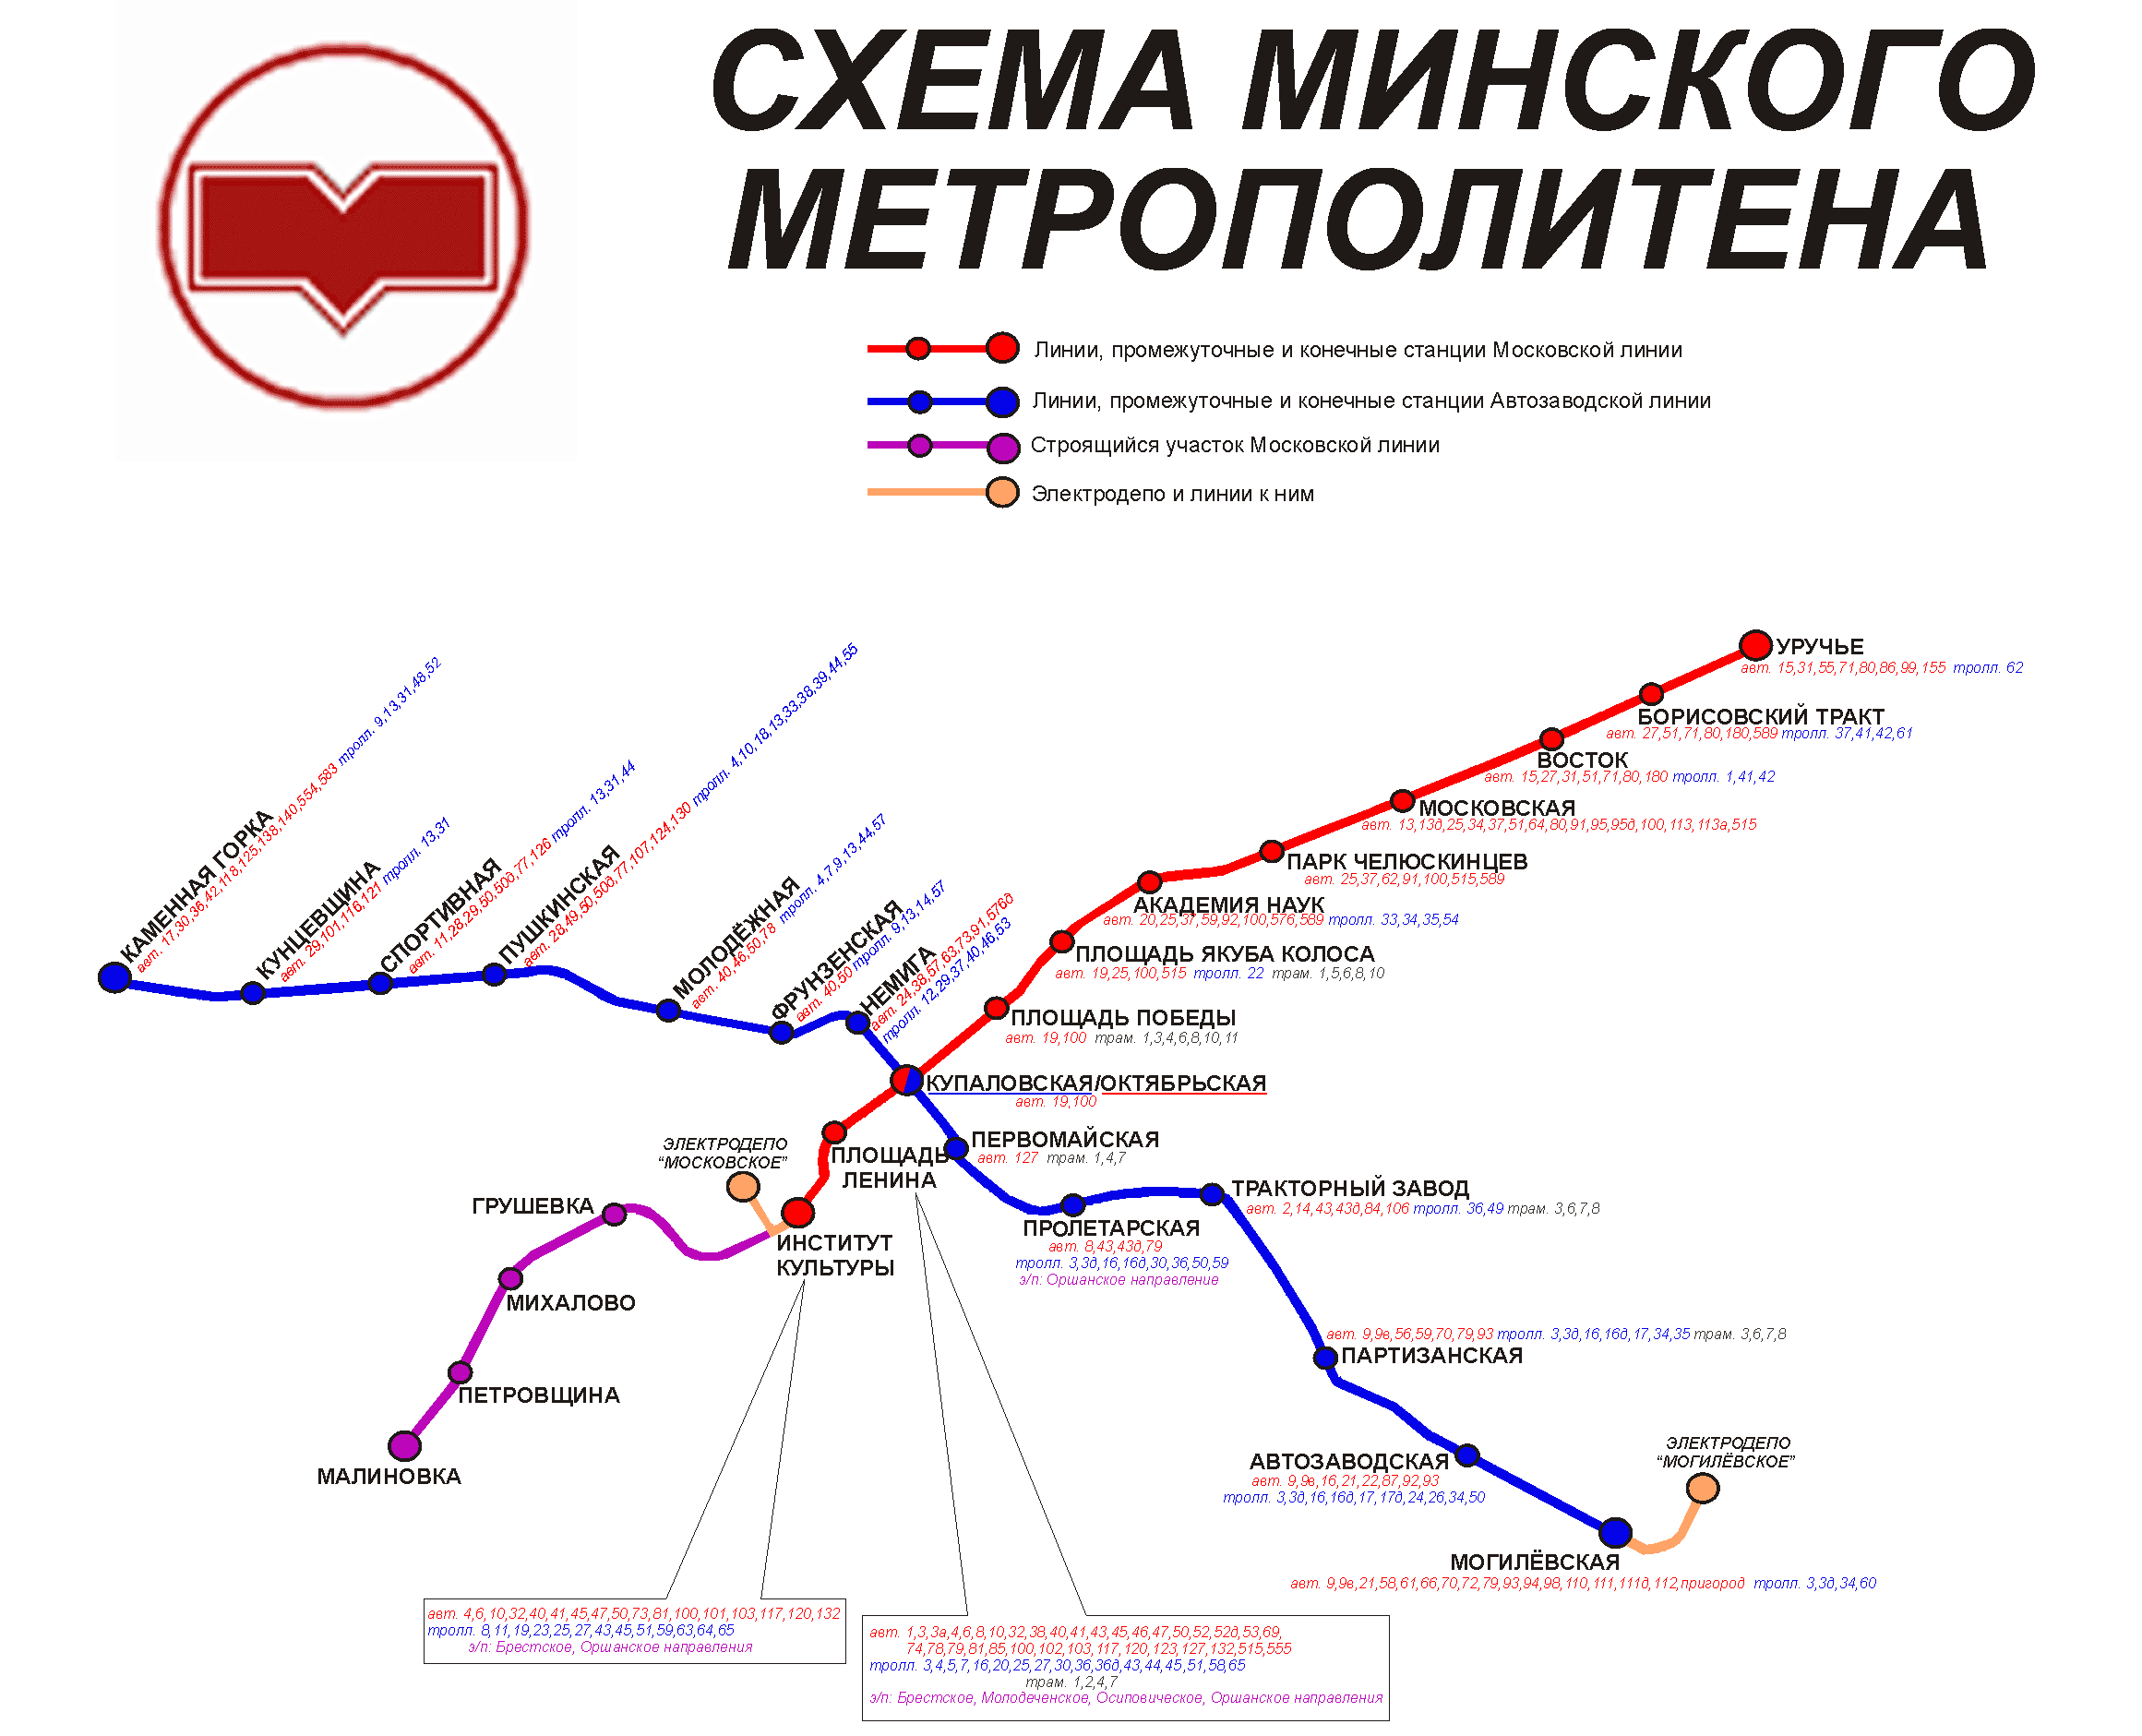 Минск — Метрополитен — Схемы